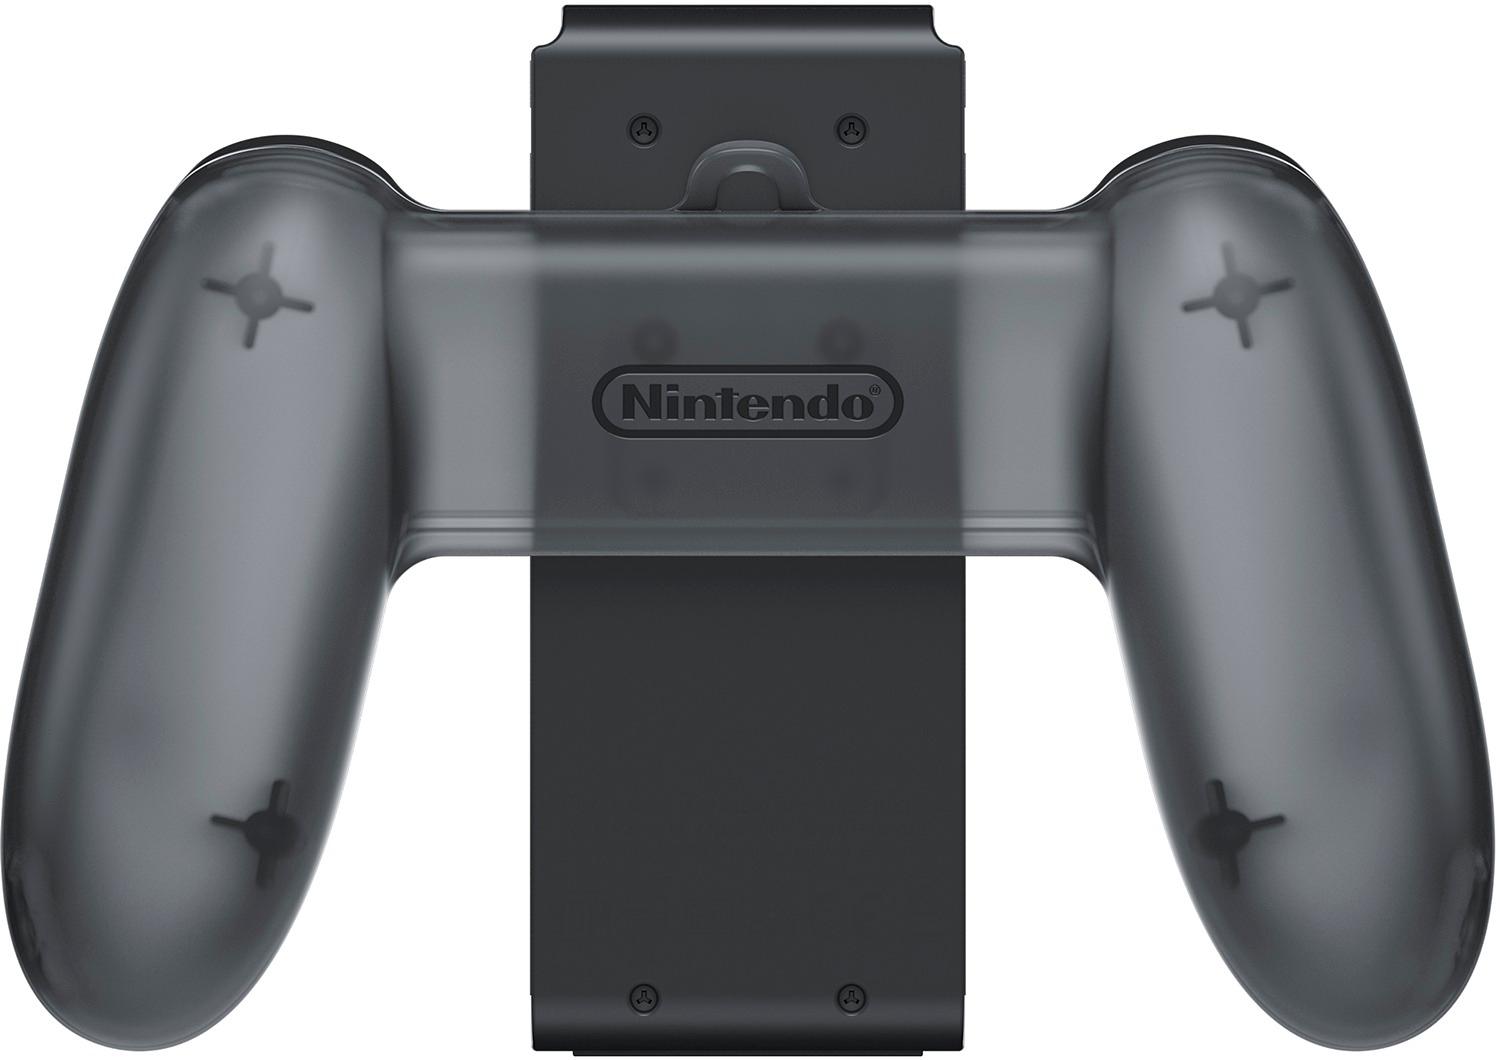 JoyGrip: Joy-Con Charging Grip for Nintendo SWITCH OLED and Regular Mo –  Skull & Co. Gaming